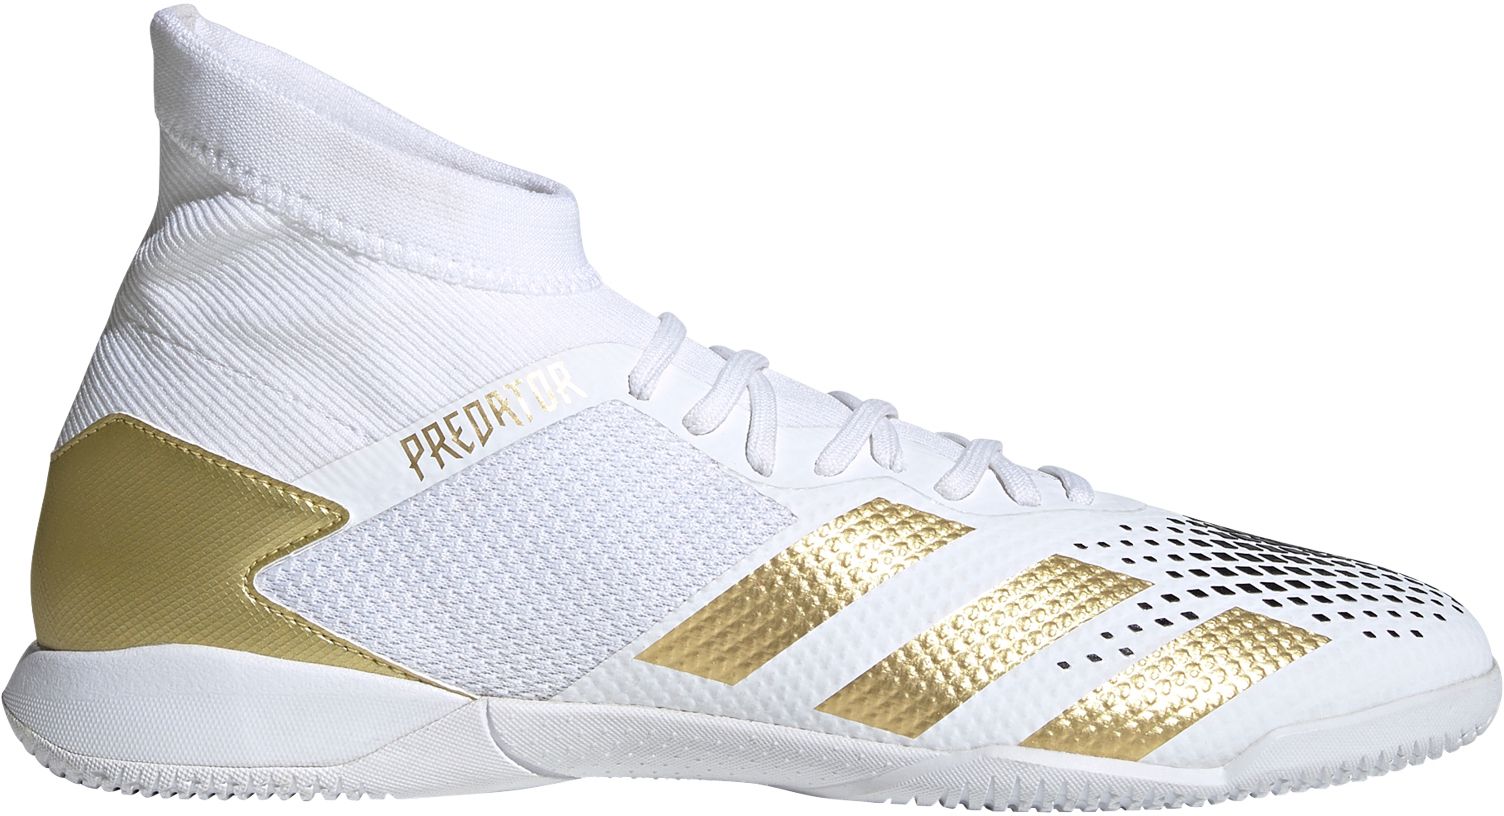 adidas predator 20.3 indoor soccer shoes